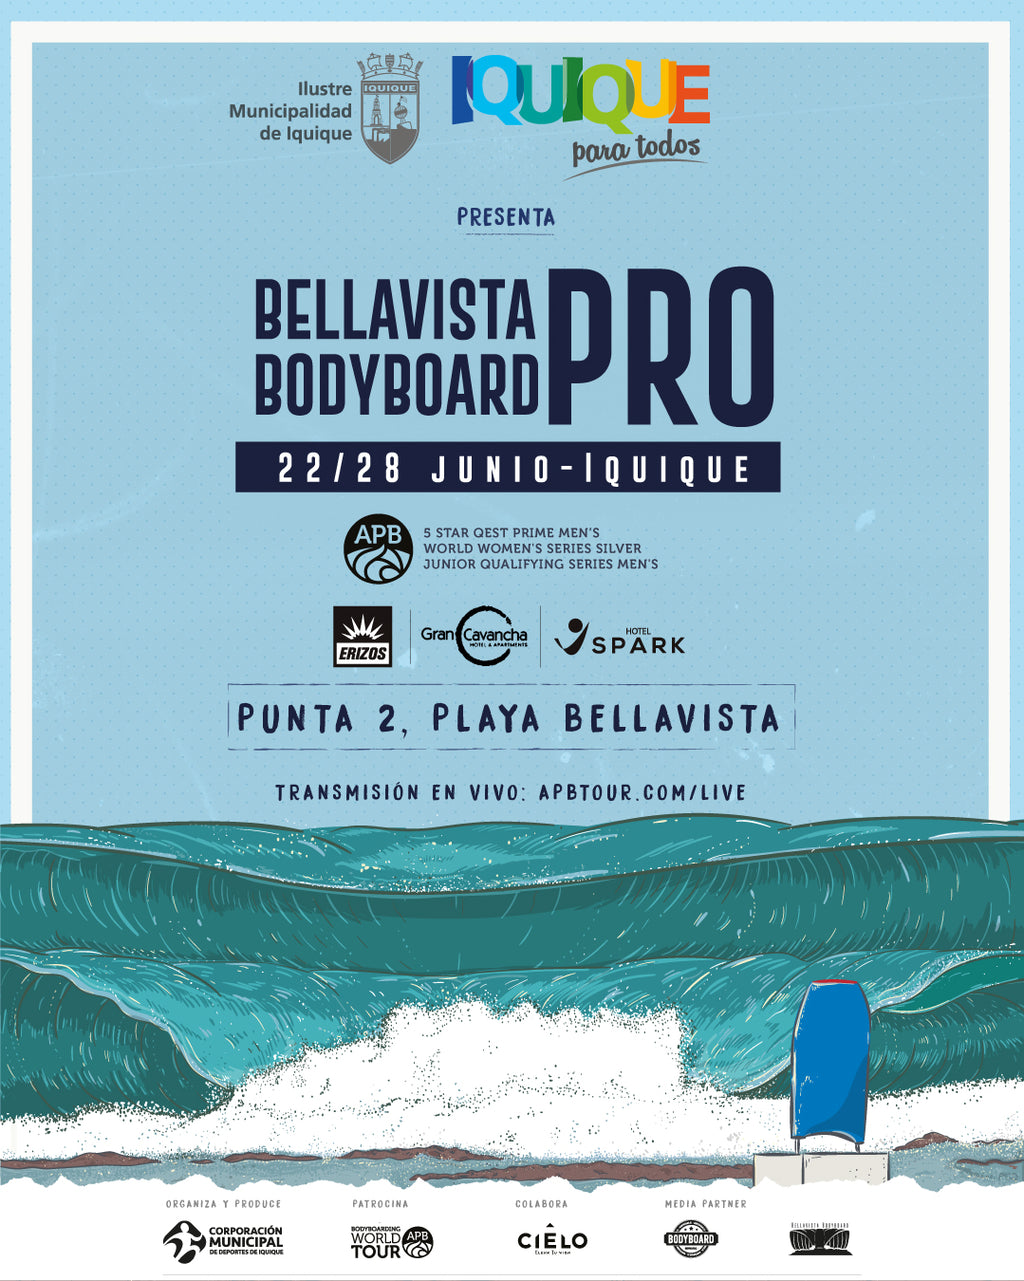 Bellavista Bodyboard Pro By ERIZOS